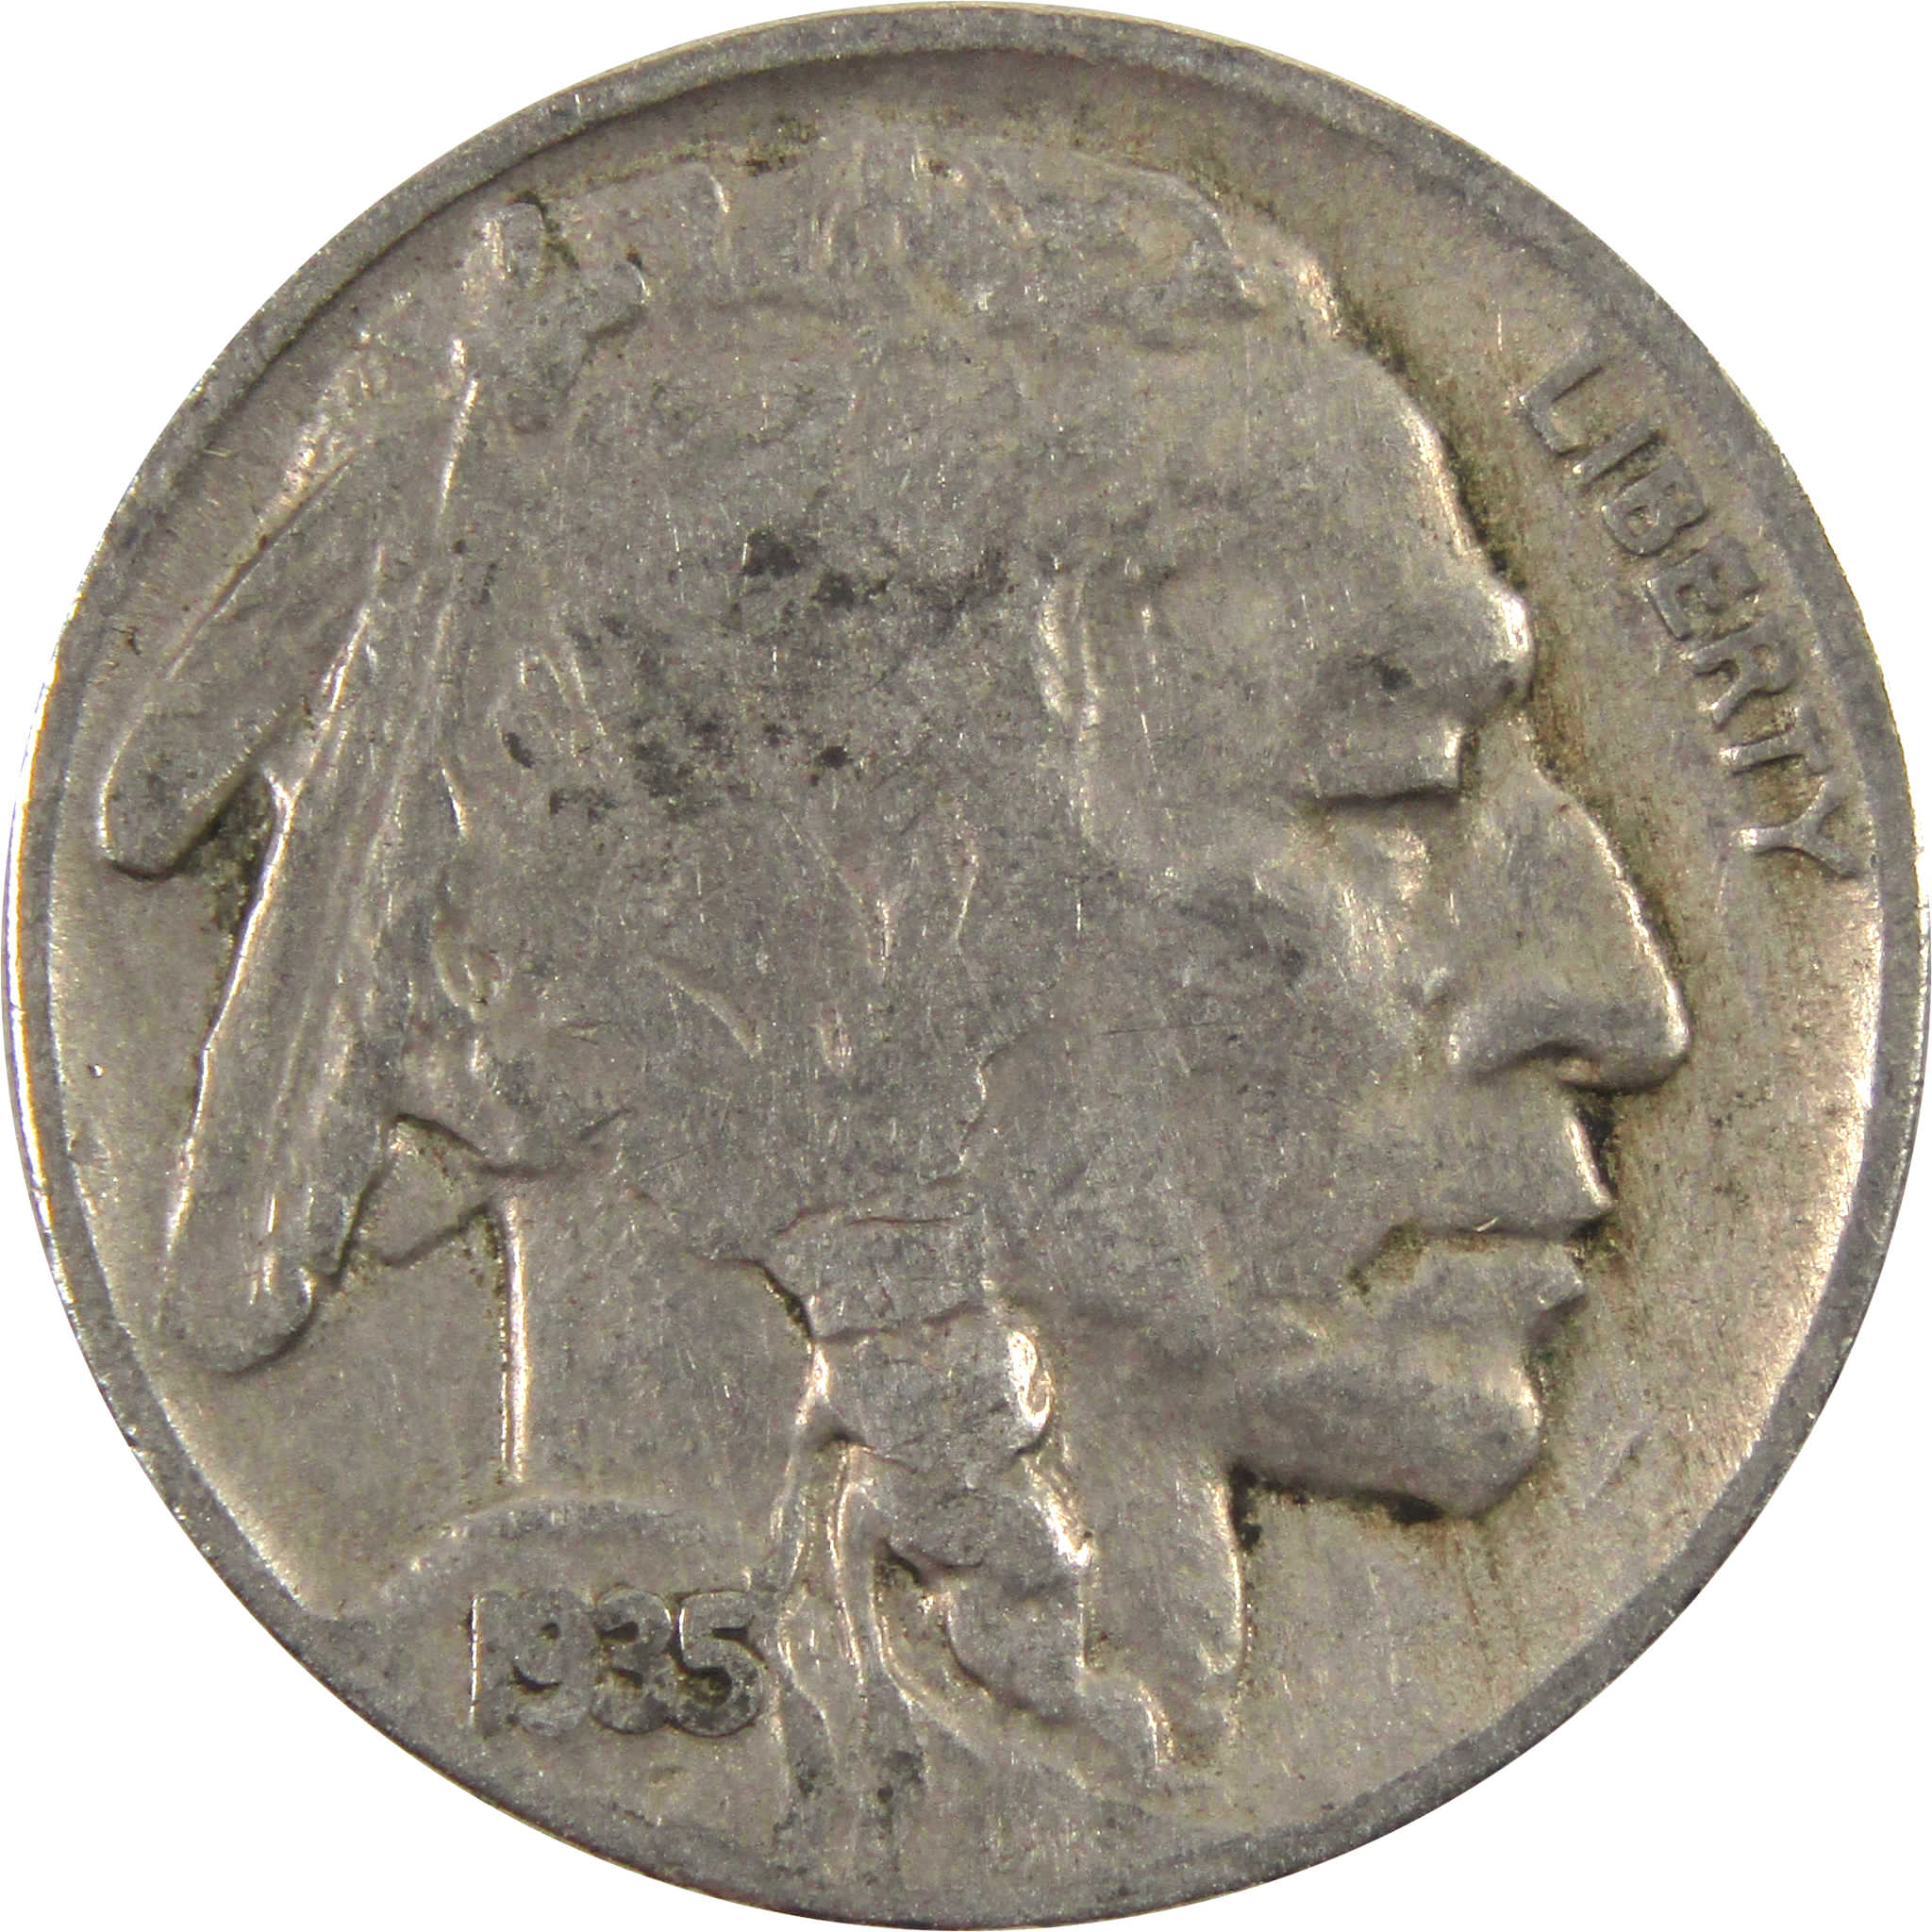 1935 Indian Head Buffalo Nickel F Fine 5c Coin